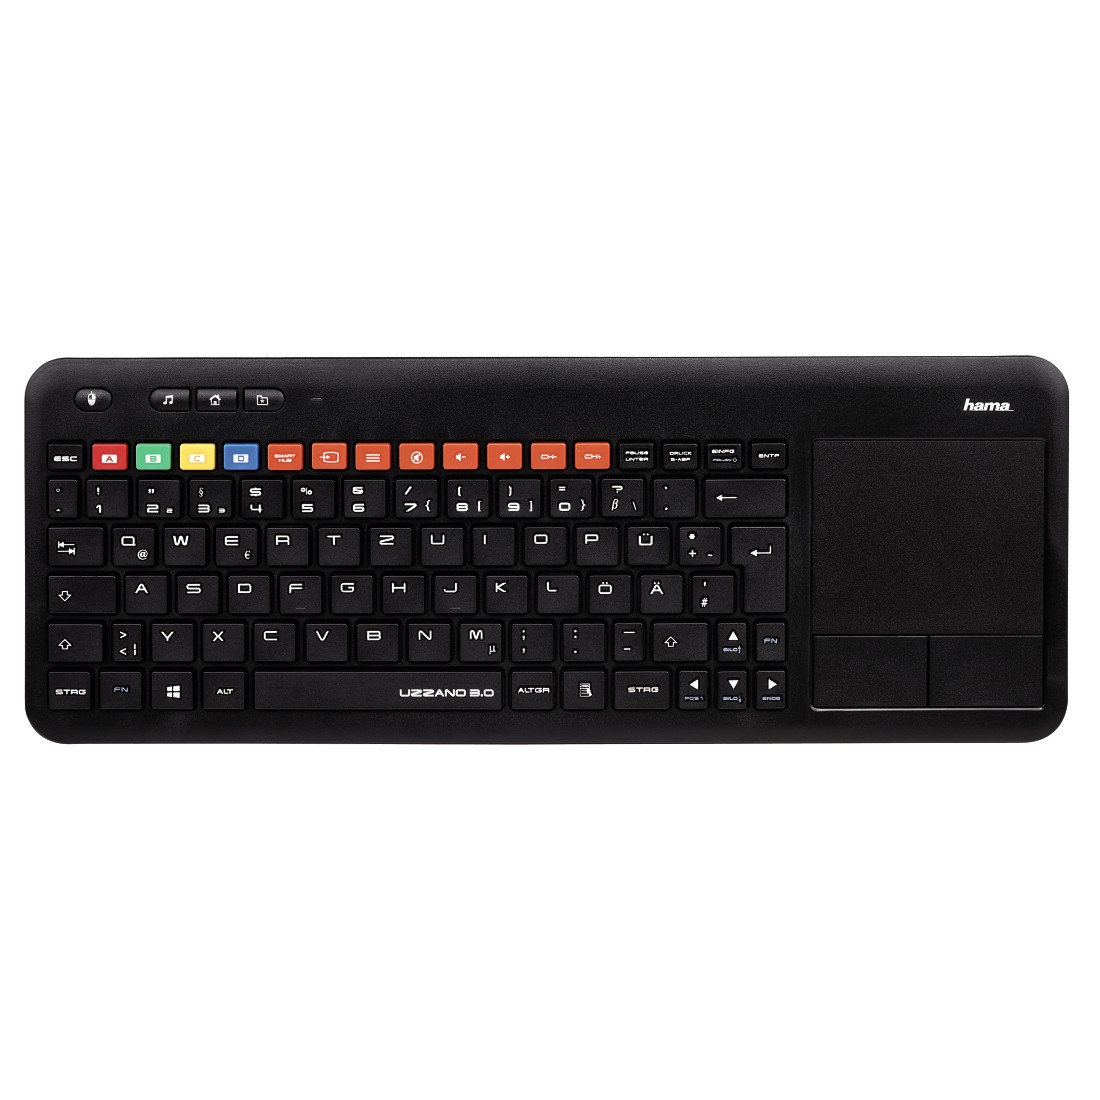 13173090 Hama "Uzzano 3.0" Smart TV Keyboard for Samsung Smart TV